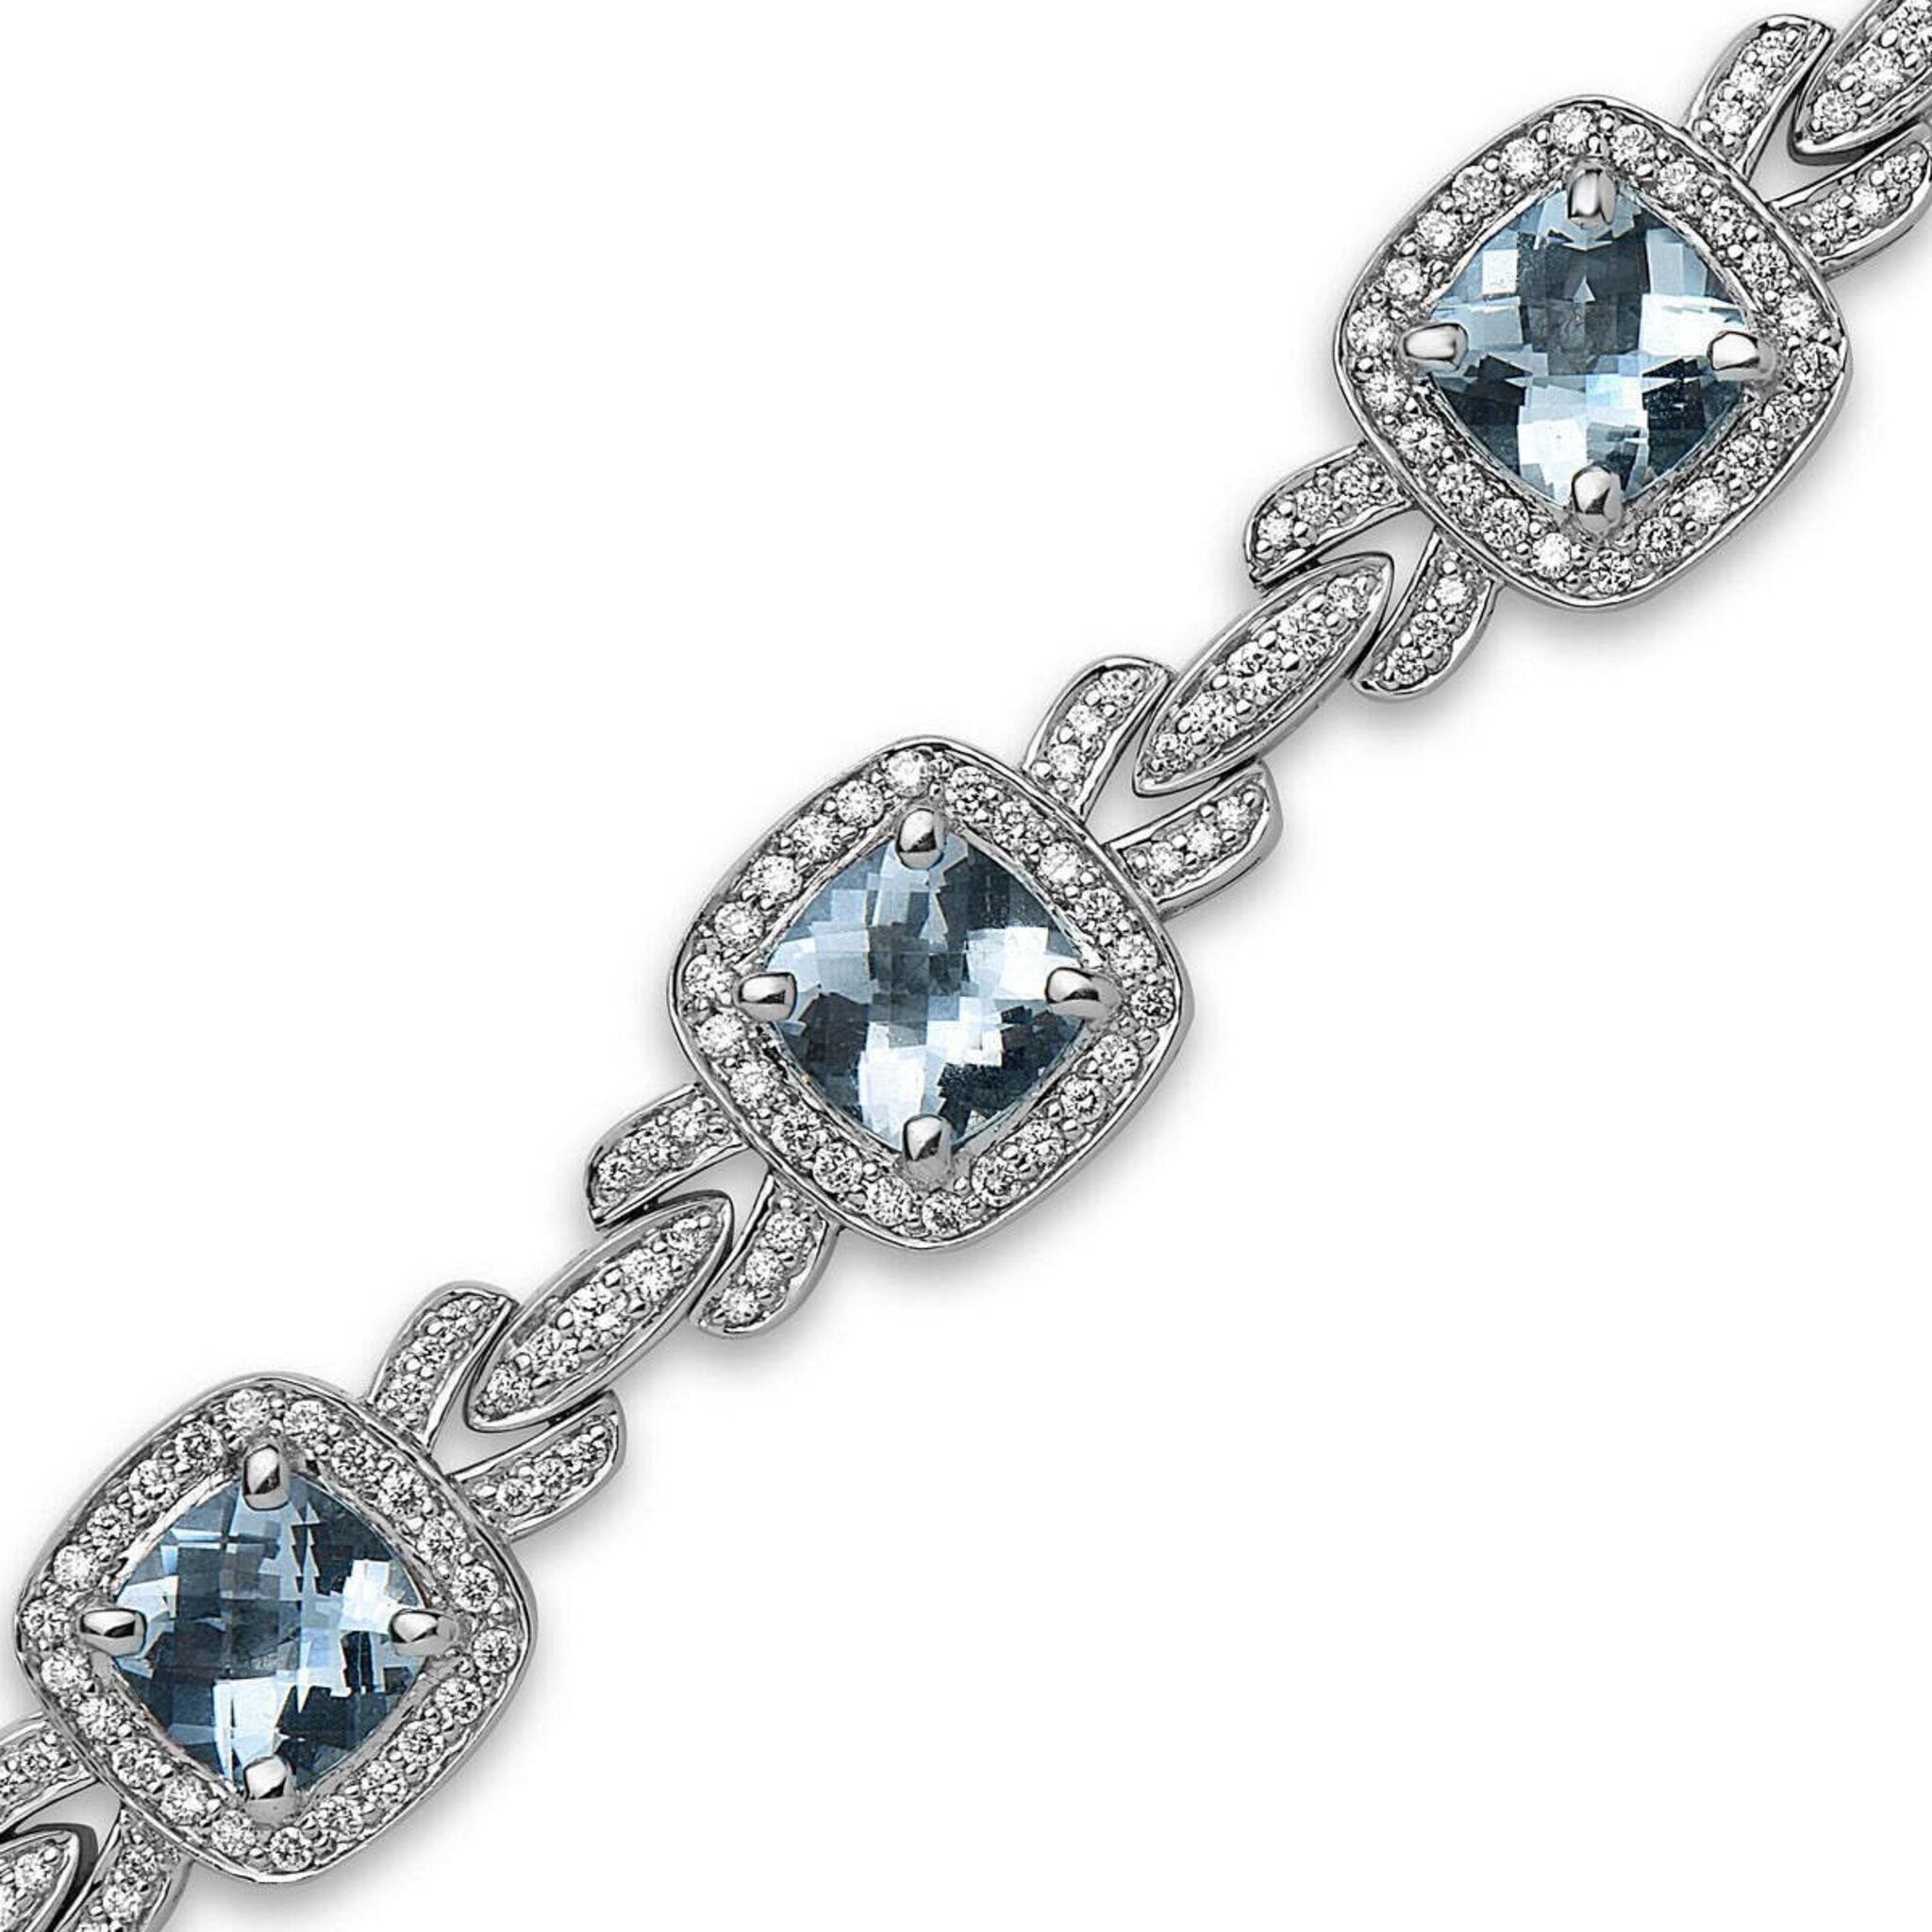 Charles Krypell - Pastel Diamond Bridle Cushion Bracelet - Aquamarine